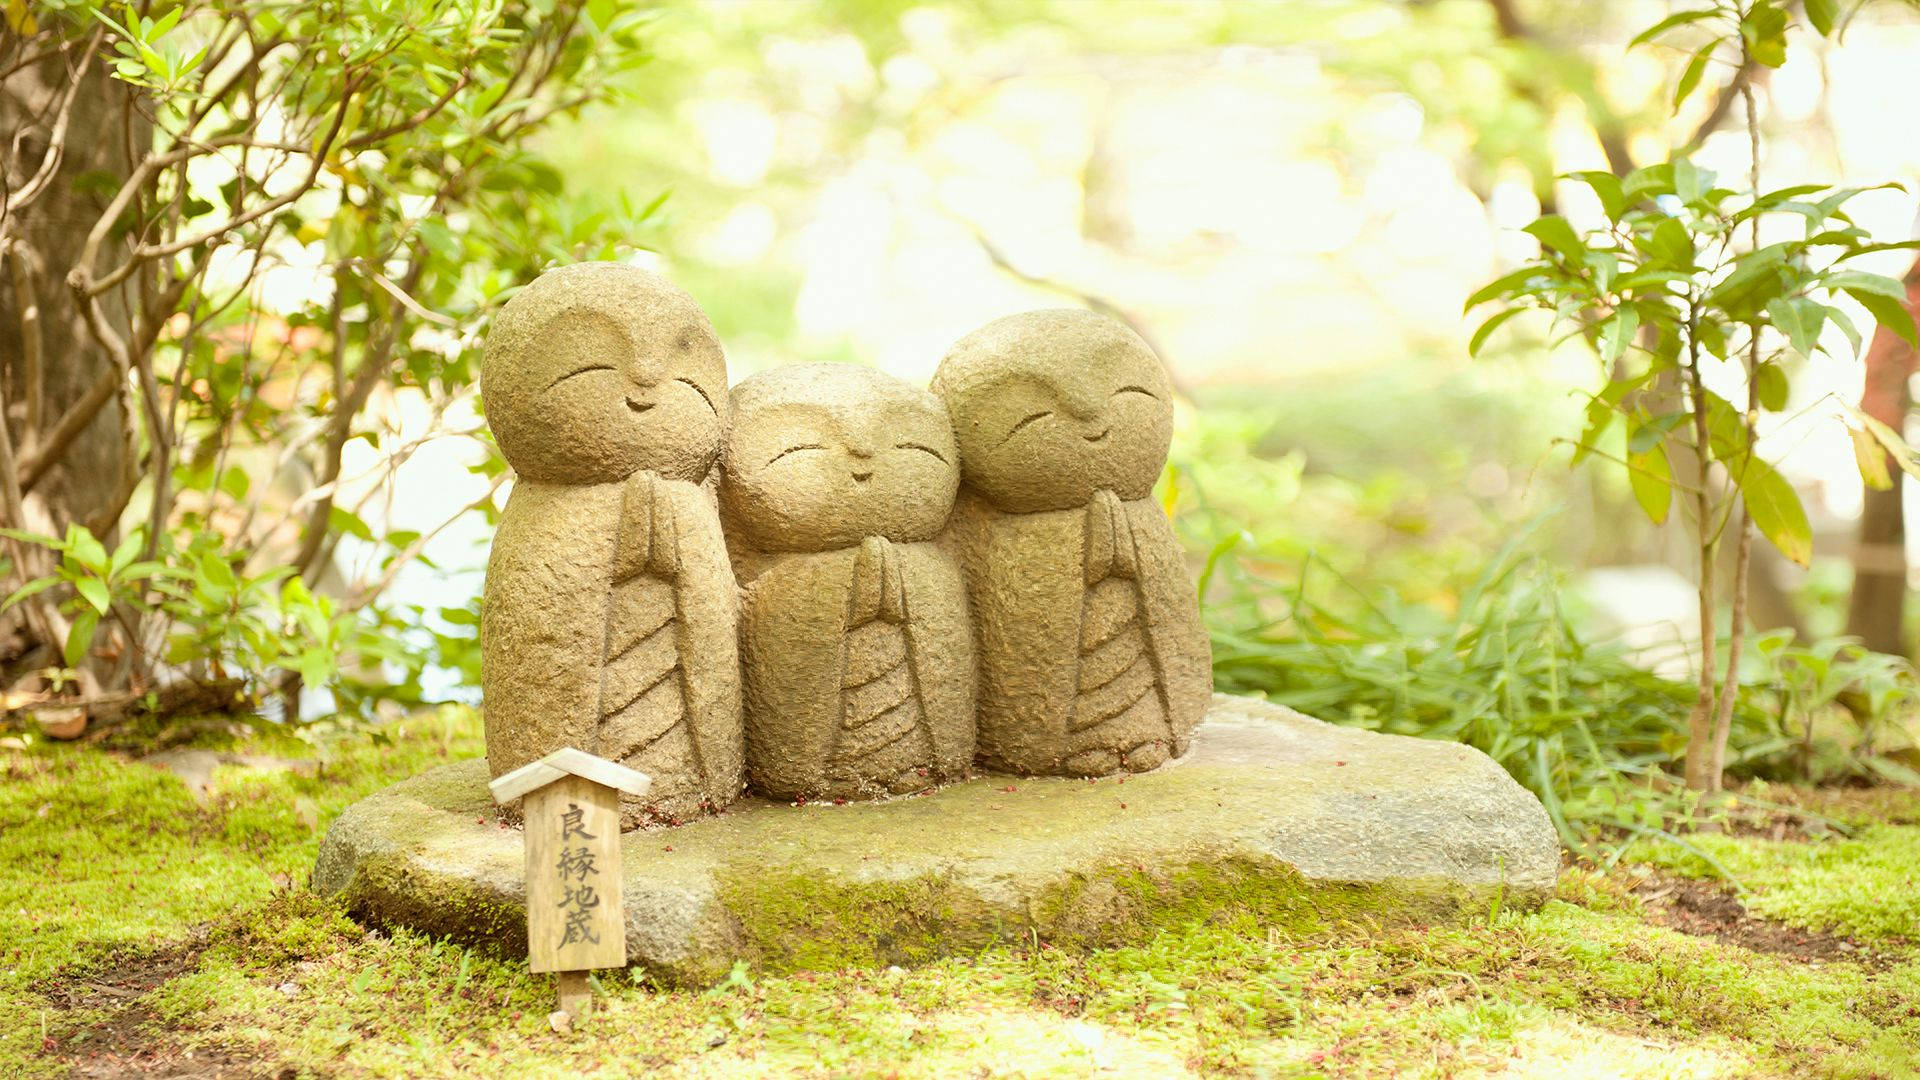 Caption: Serenity In Stone - Zen Garden With Monk Statues Wallpaper